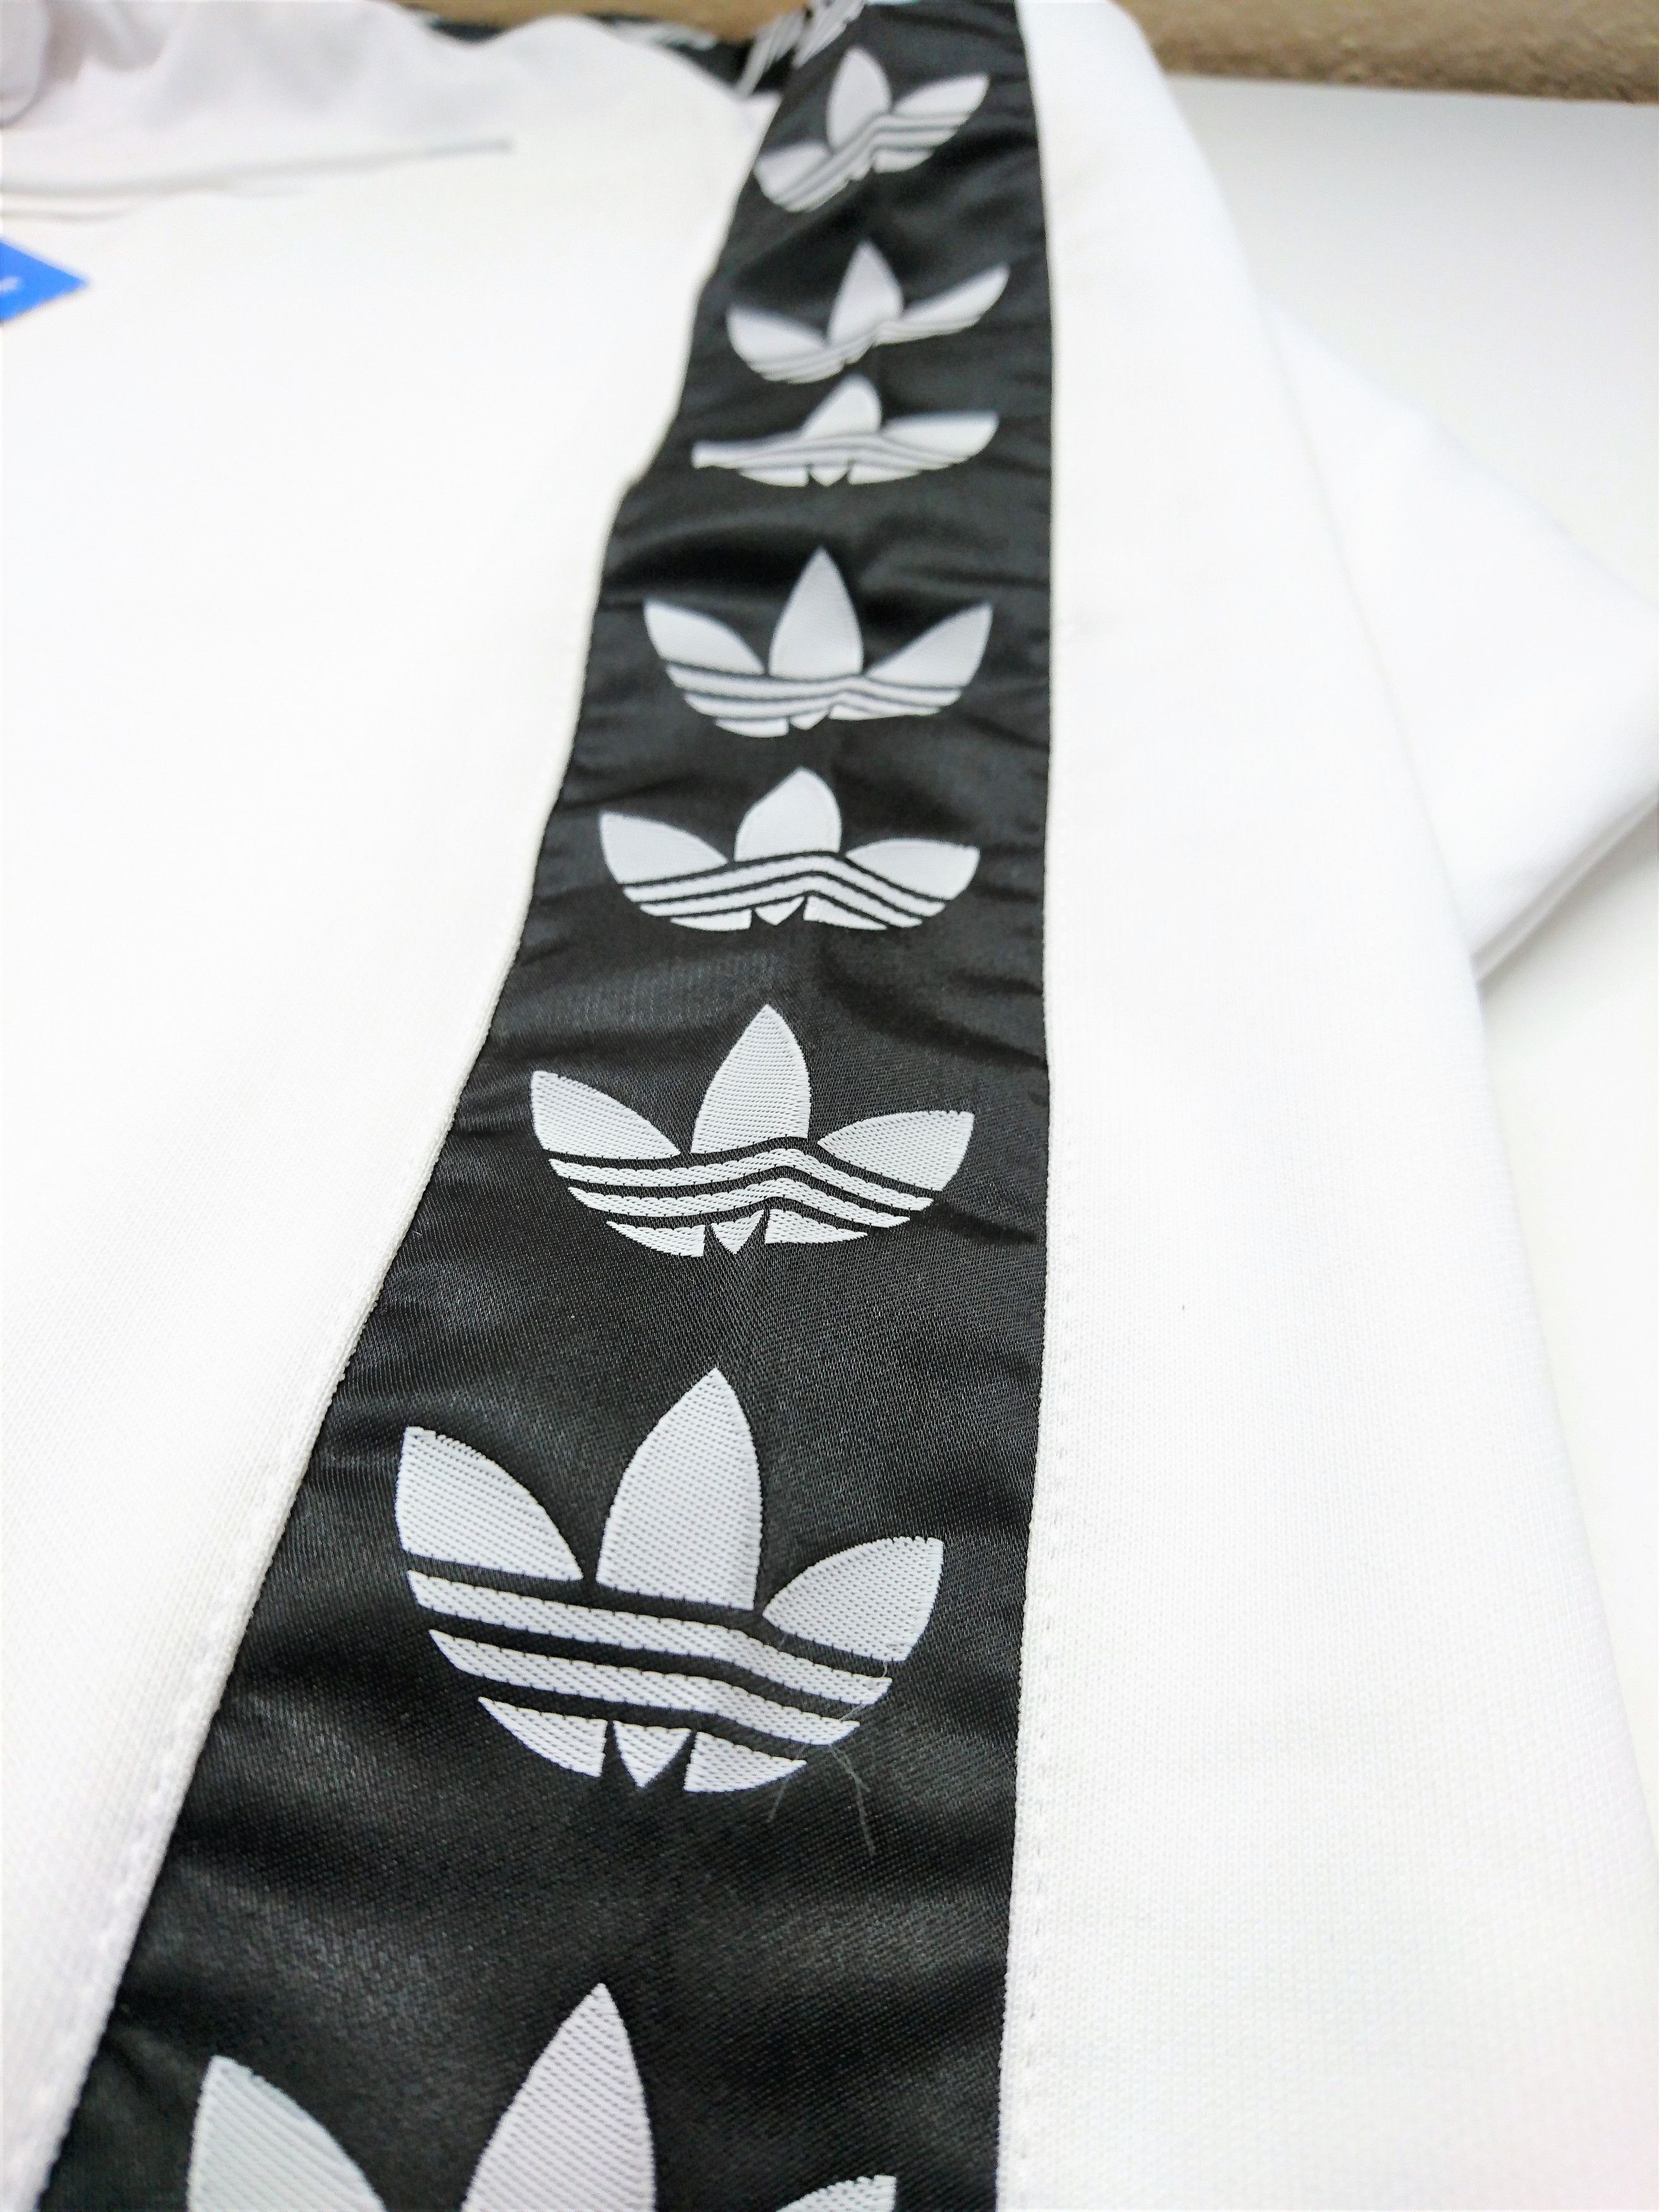 Adidas Adidas Originals TNT Tape pullover hoodie Size US M / EU 48-50 / 2 - 6 Thumbnail